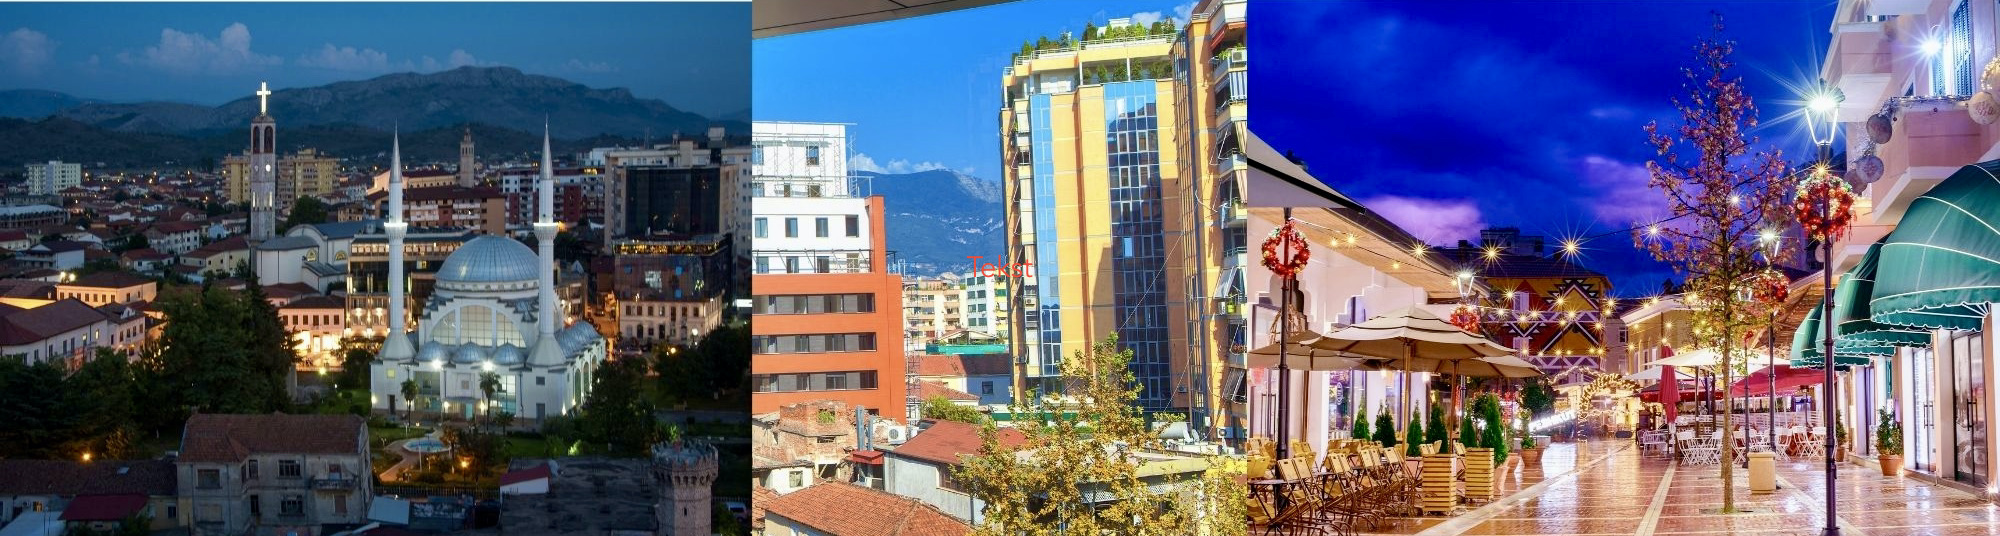 Tirana/stolica Albanii 